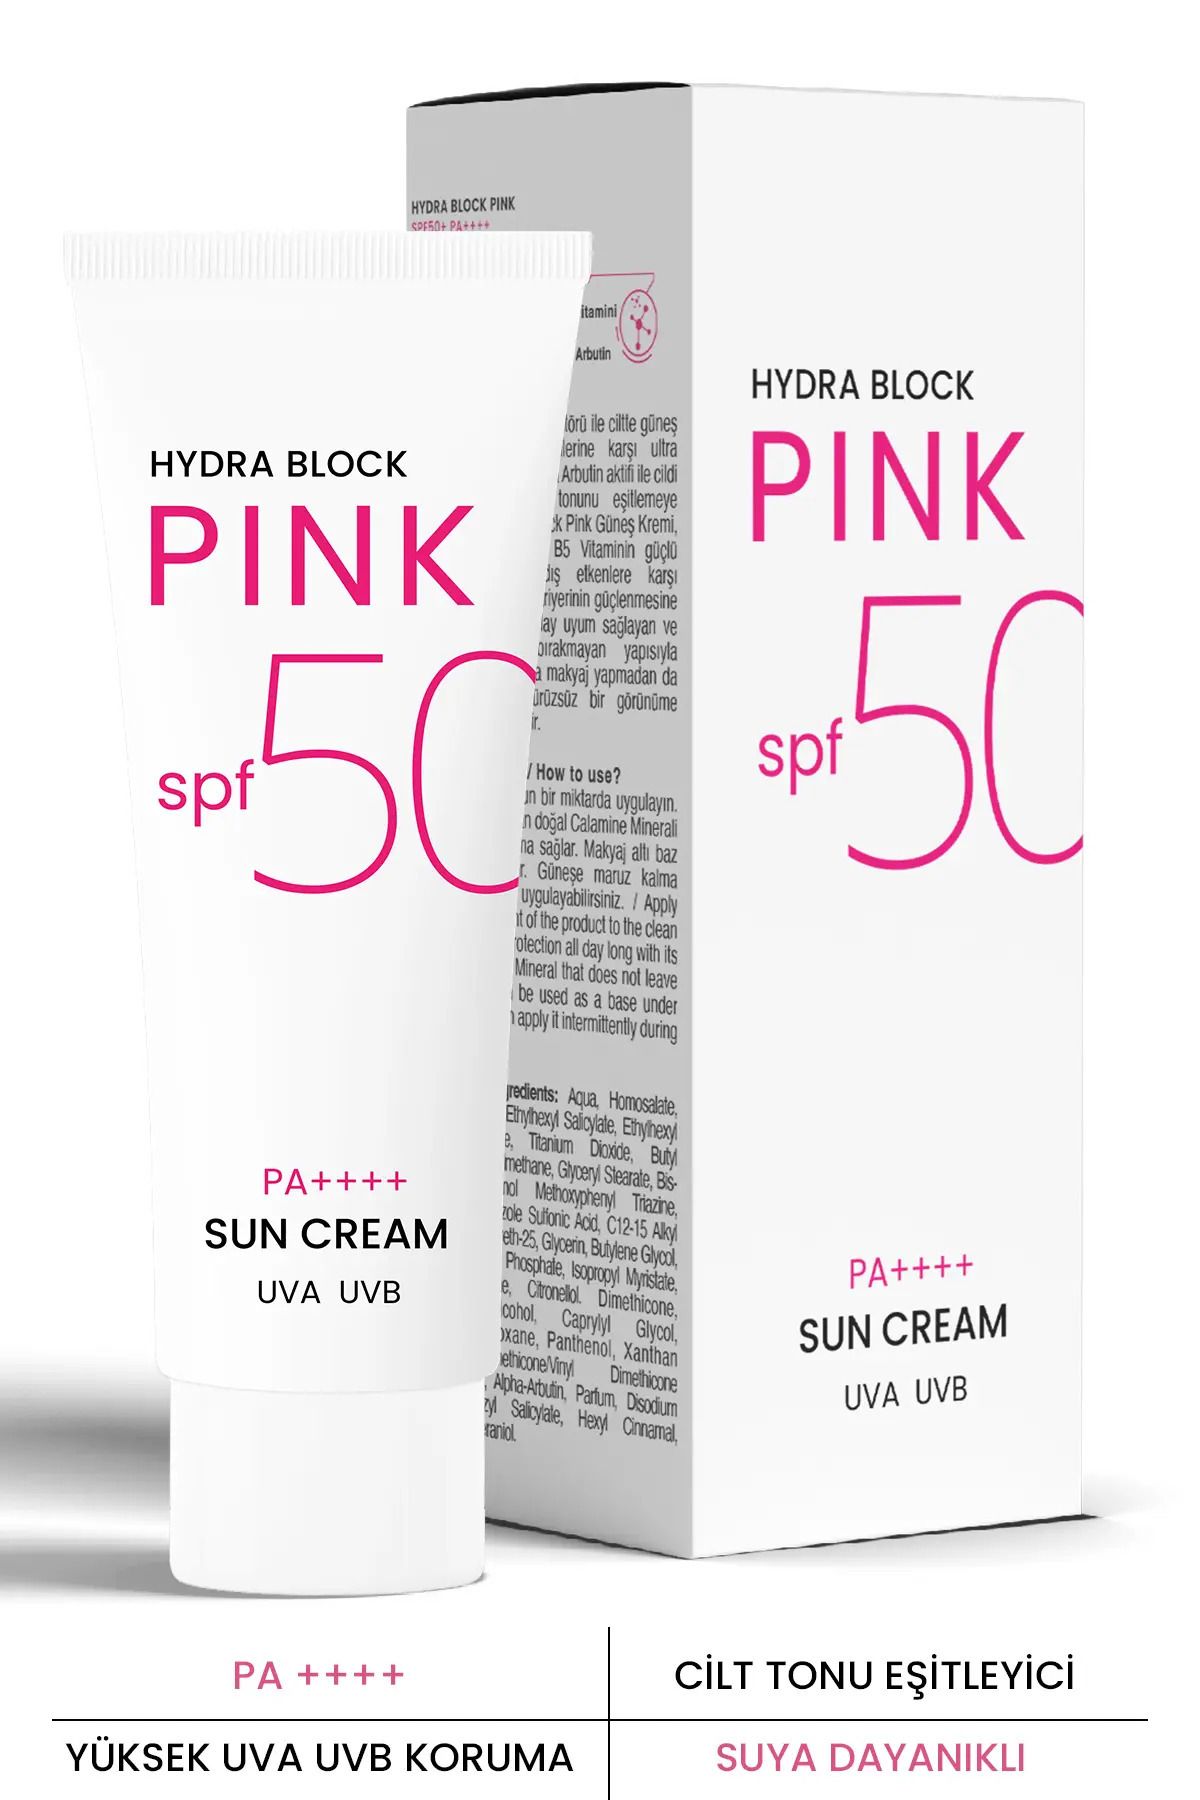 PROCSIN کرم ضد آفتاب رنگی Hydra Block Pink SPF50+ کاهش لک های پوستی 50 میل